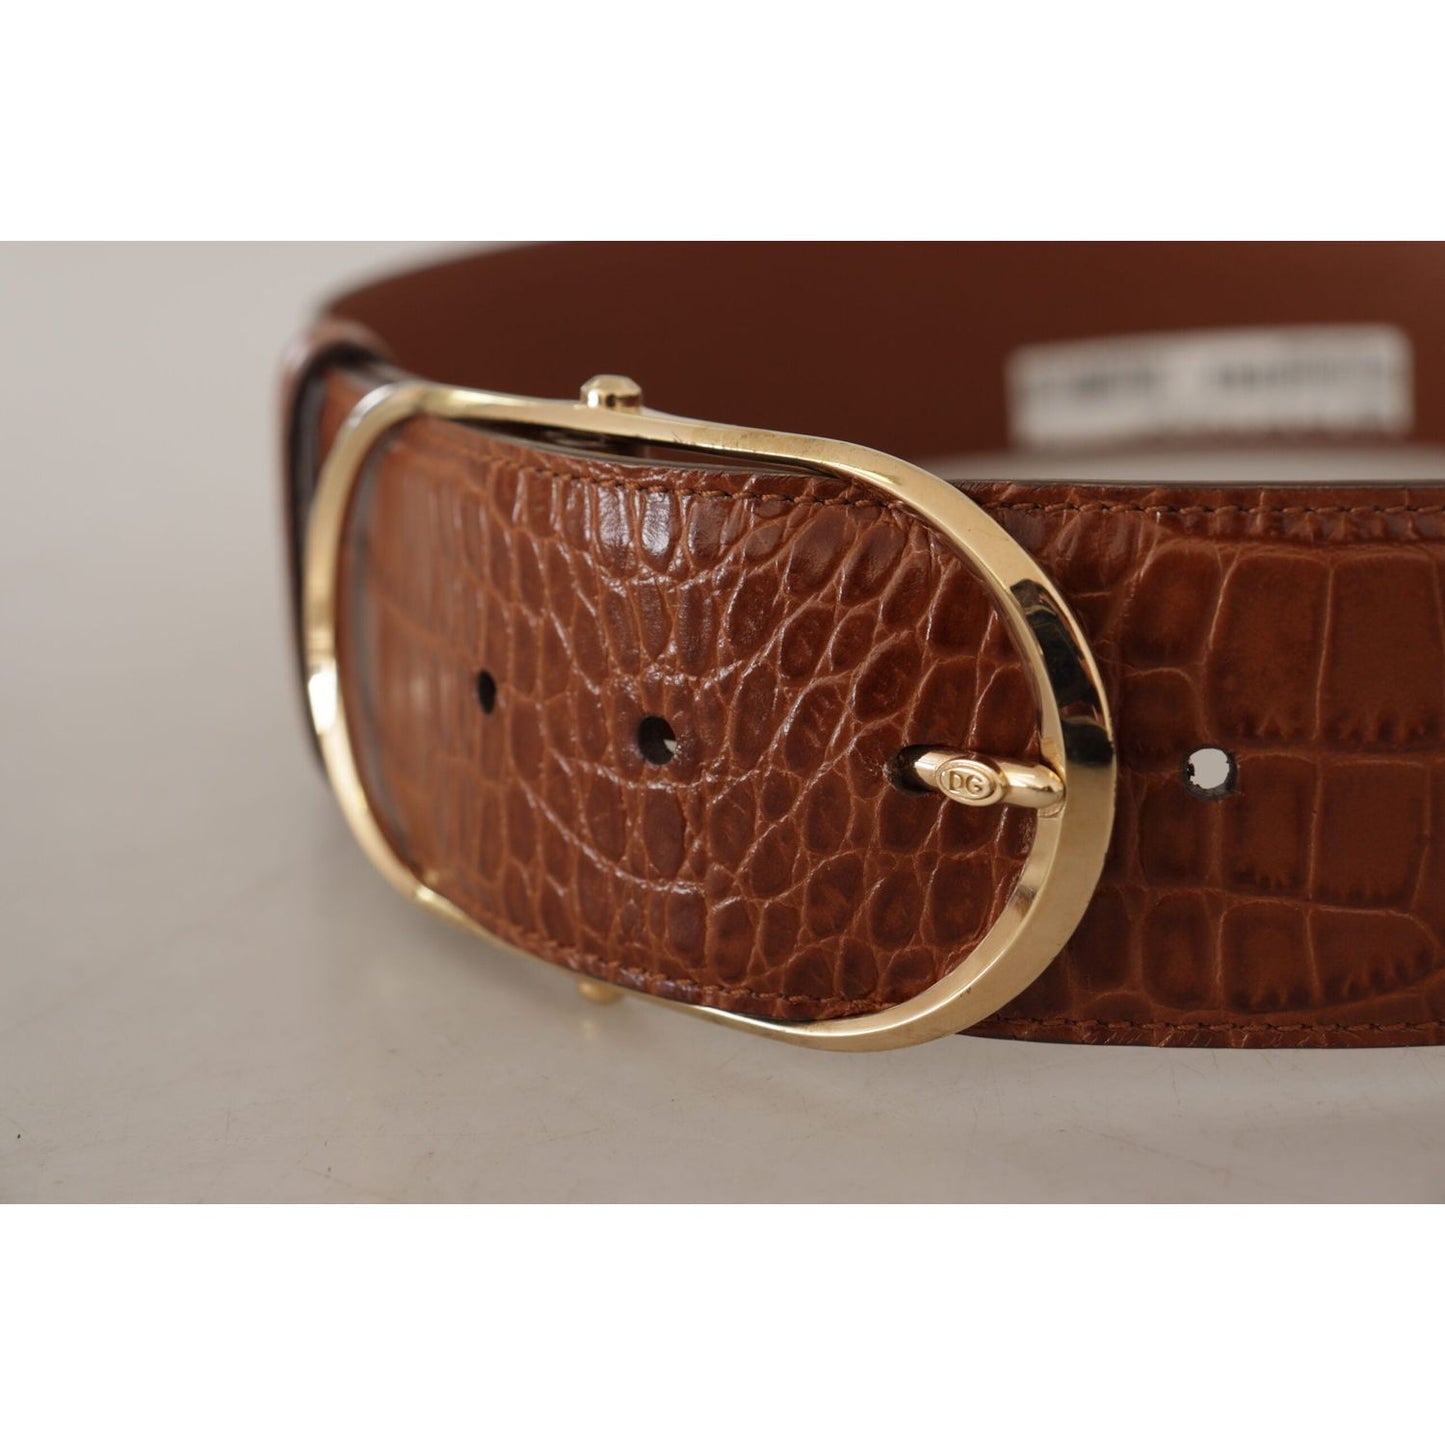 Dolce & Gabbana Enchanting Engraved Logo Leather Belt brown-wide-waist-leather-gold-oval-metal-buckle-belt IMG_9077-scaled-f16d2bd5-0d5.jpg